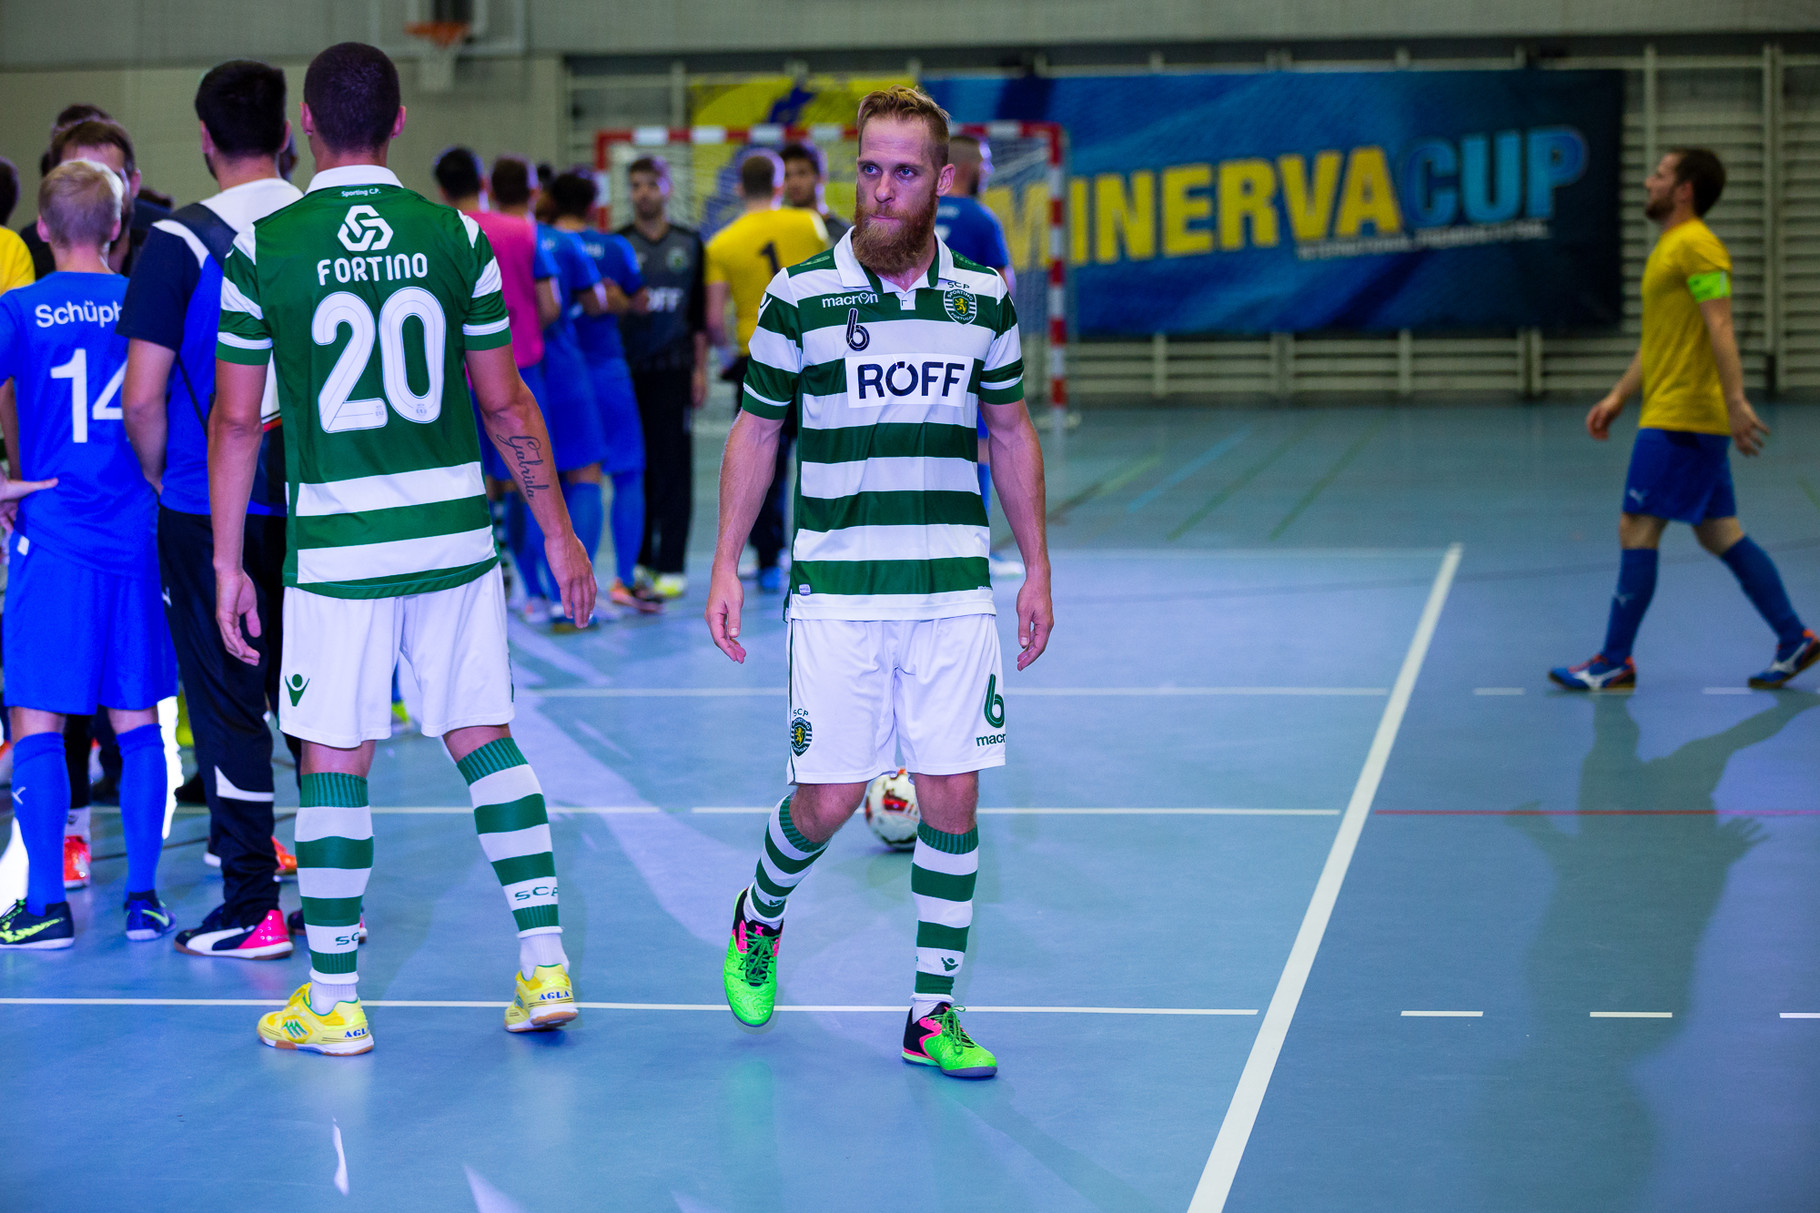 MinervaCup 2015 - Futsal Minerva VS. Futsal Sporting Clube de Portugal